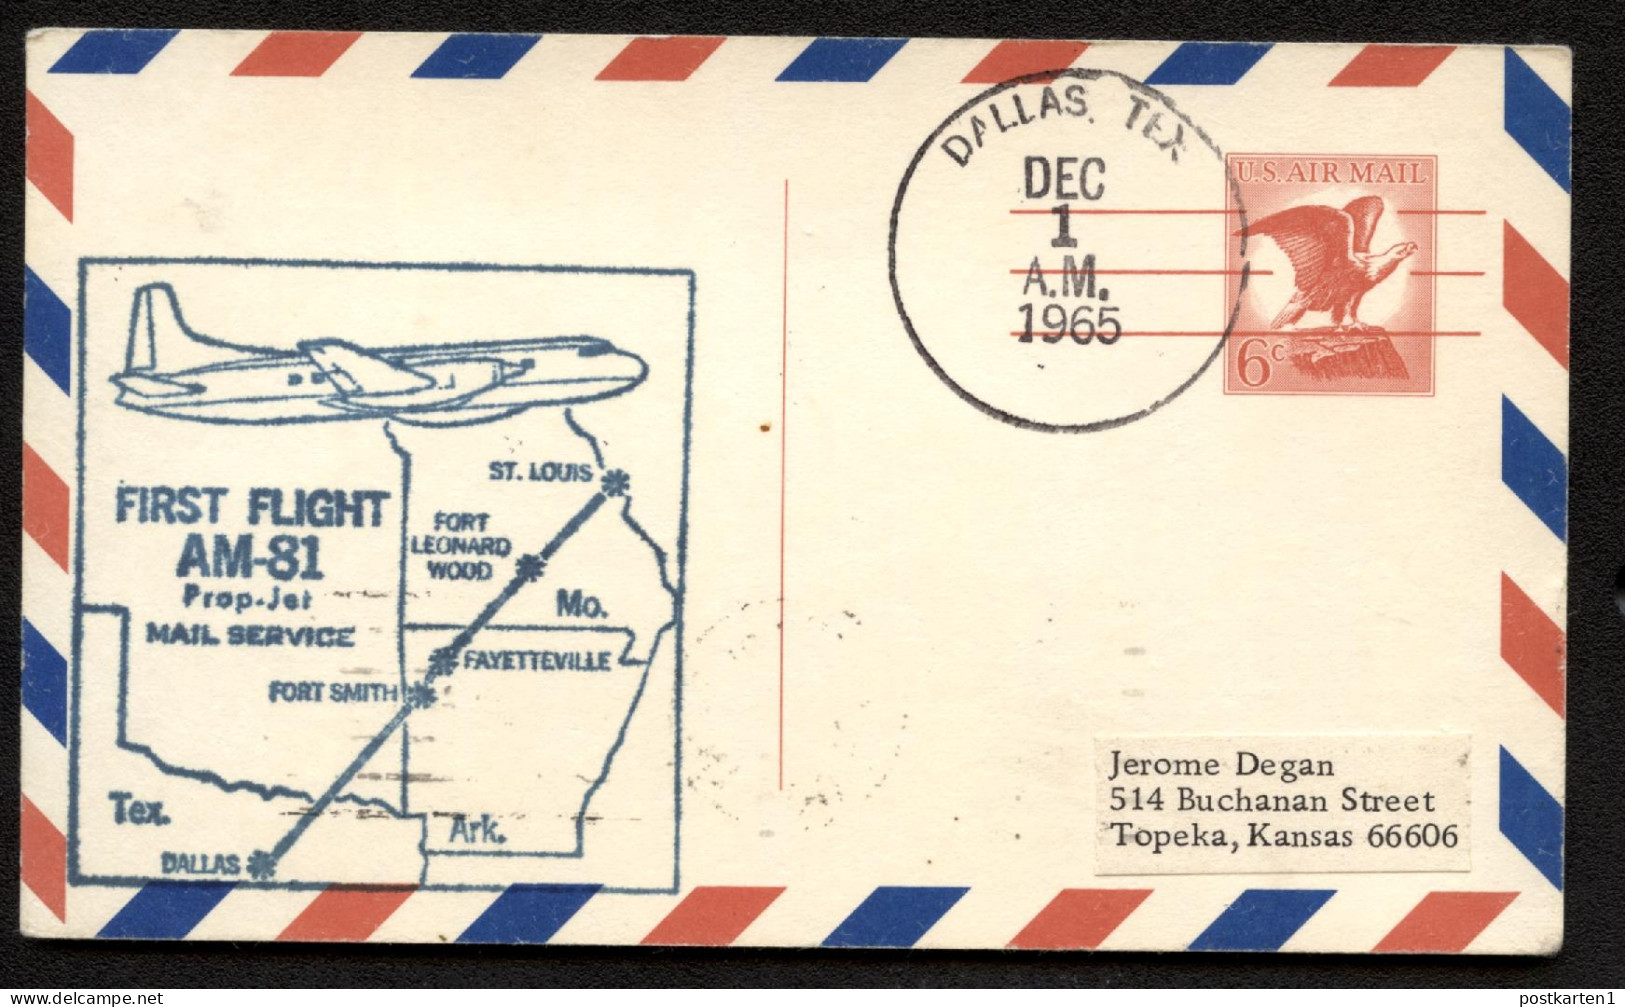 UXC4 Air Maiil Postal Card FIRST FLIGHT AM-81 Dallas TX 1965 - 1961-80